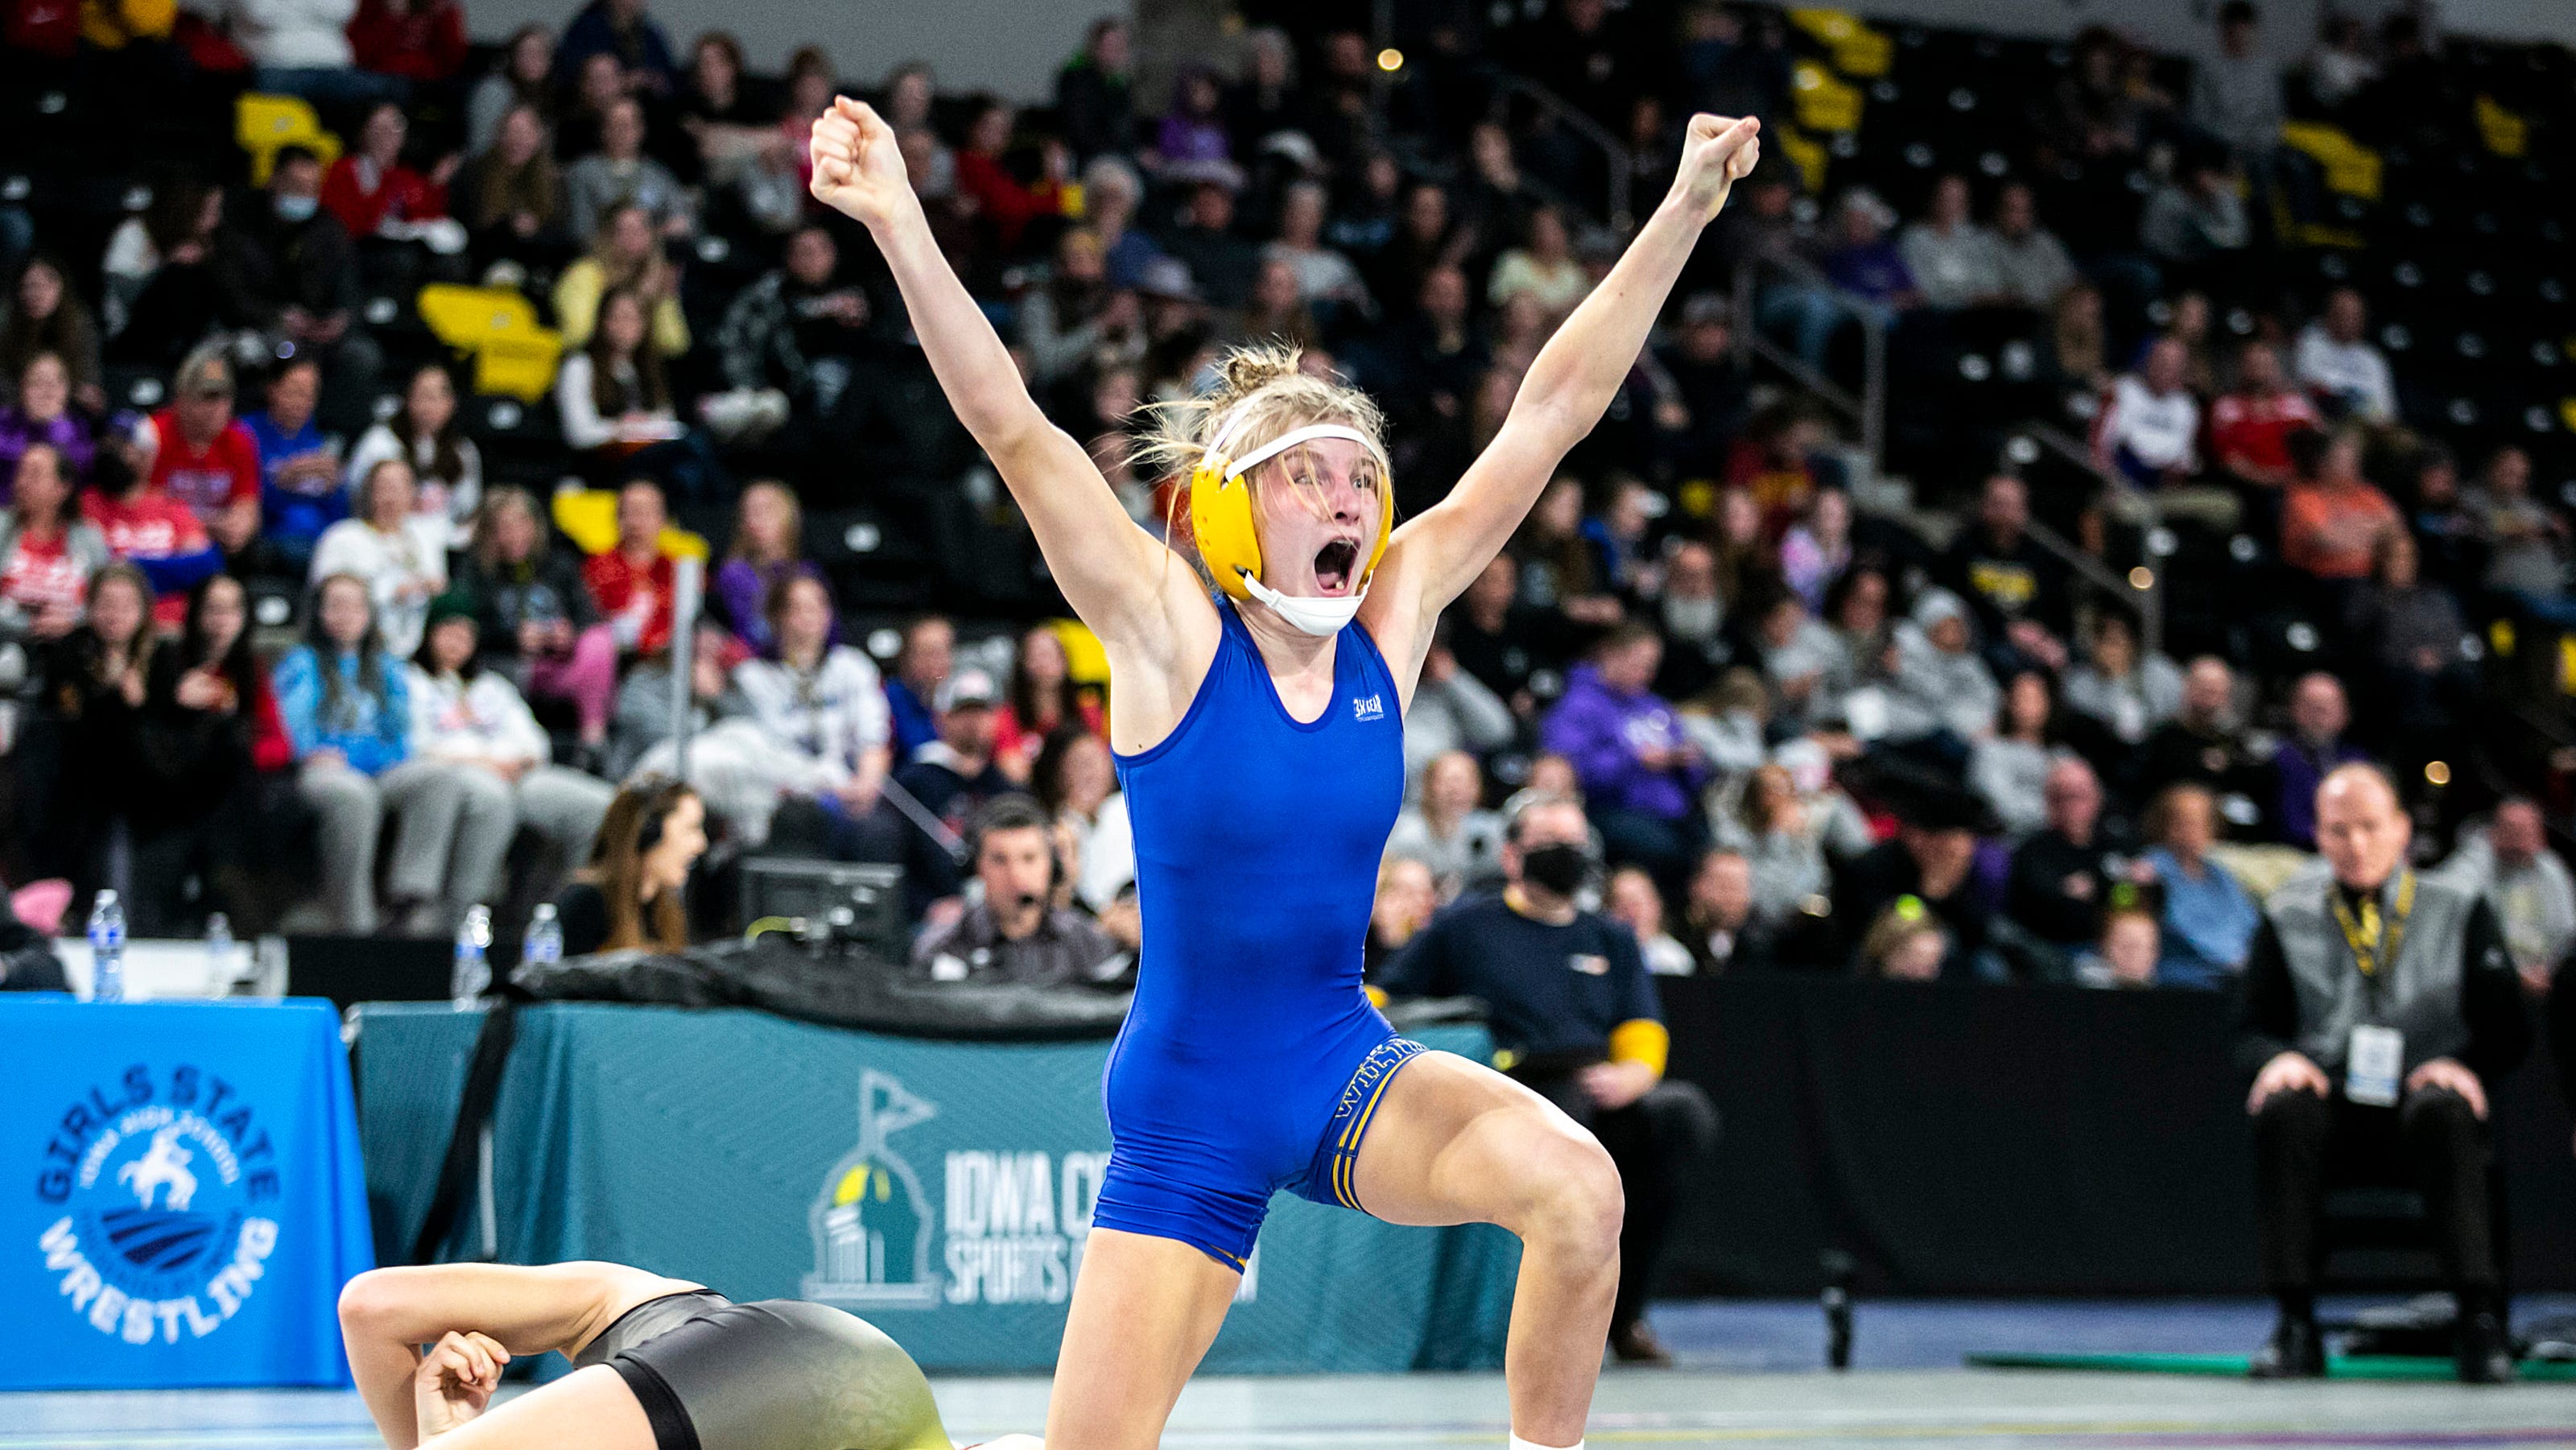 2022 Iowa girls state wrestling championships shows bright future